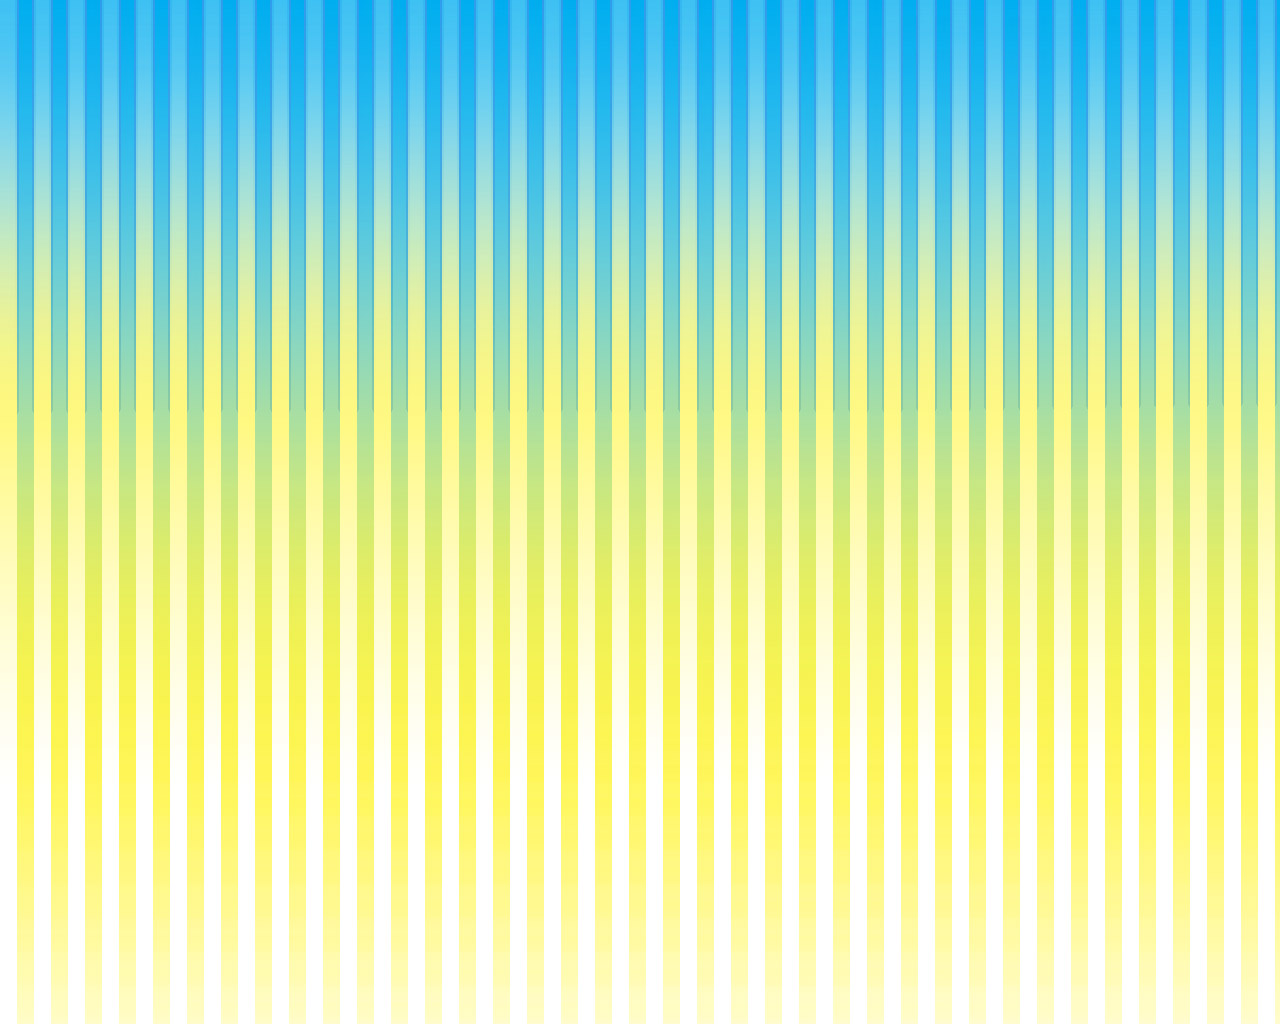 47+] Blue and Yellow Striped Wallpaper - WallpaperSafari